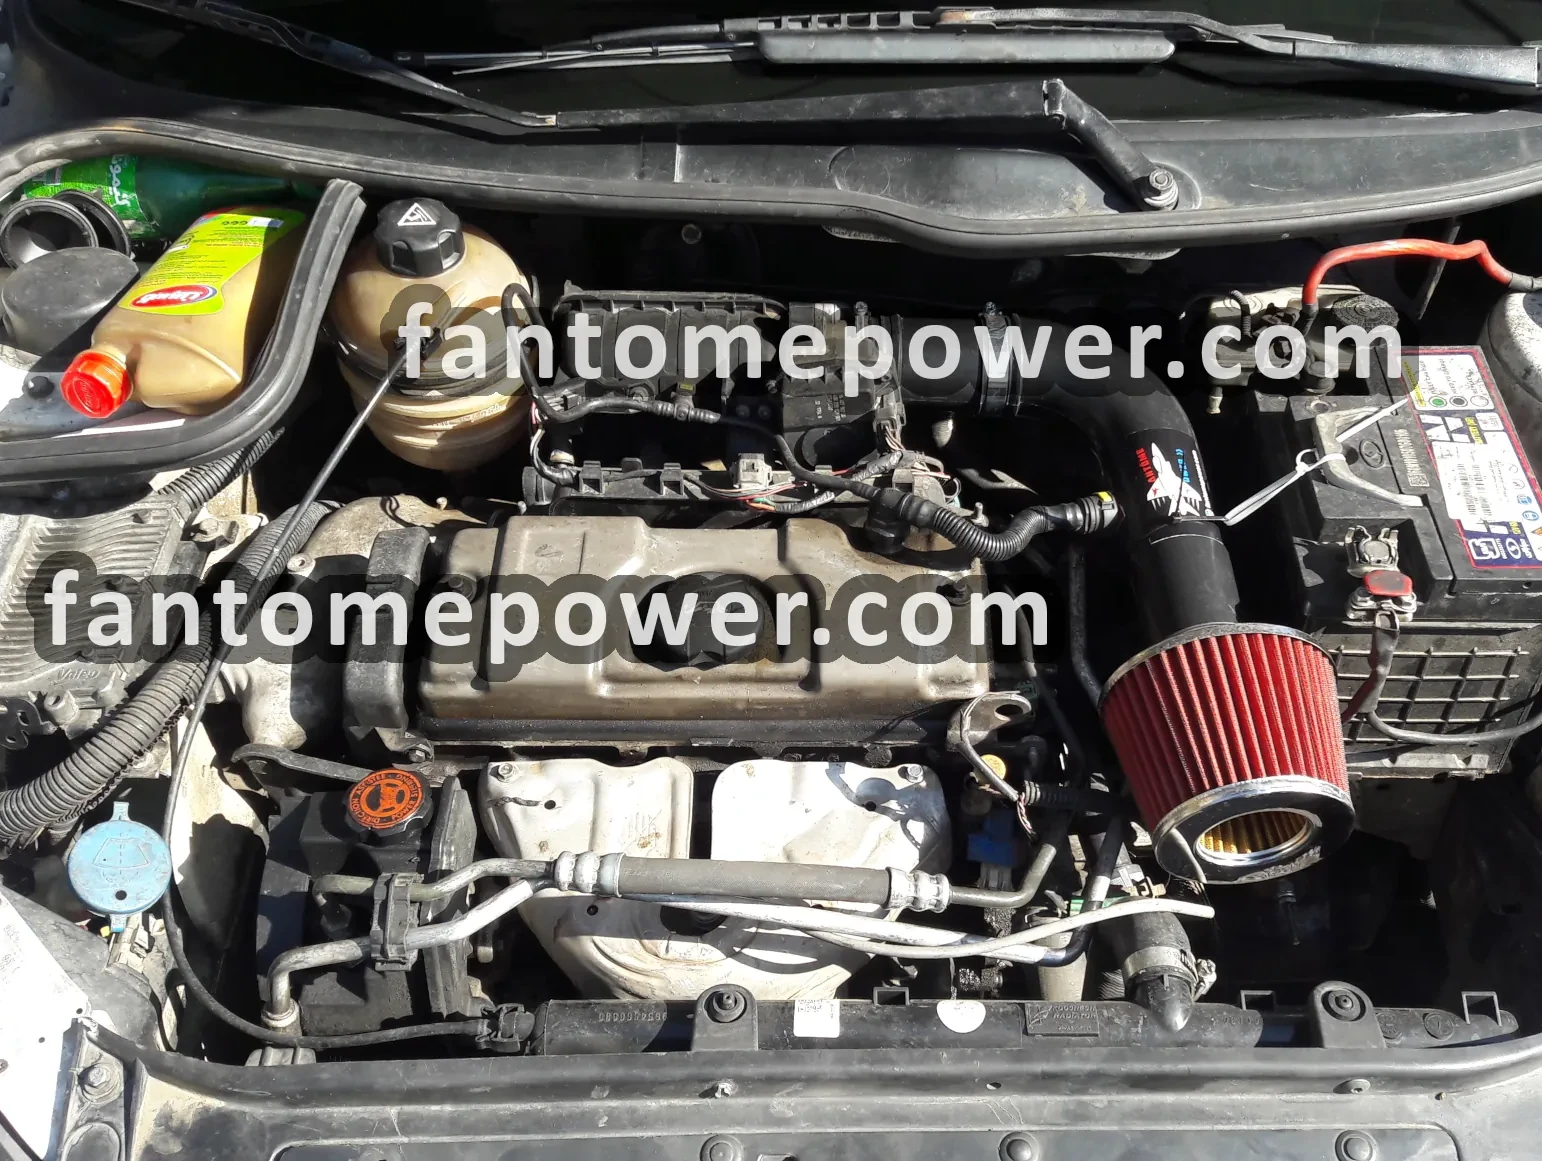 installed cold air intake kit on Peugeot 206 1.4 tu3